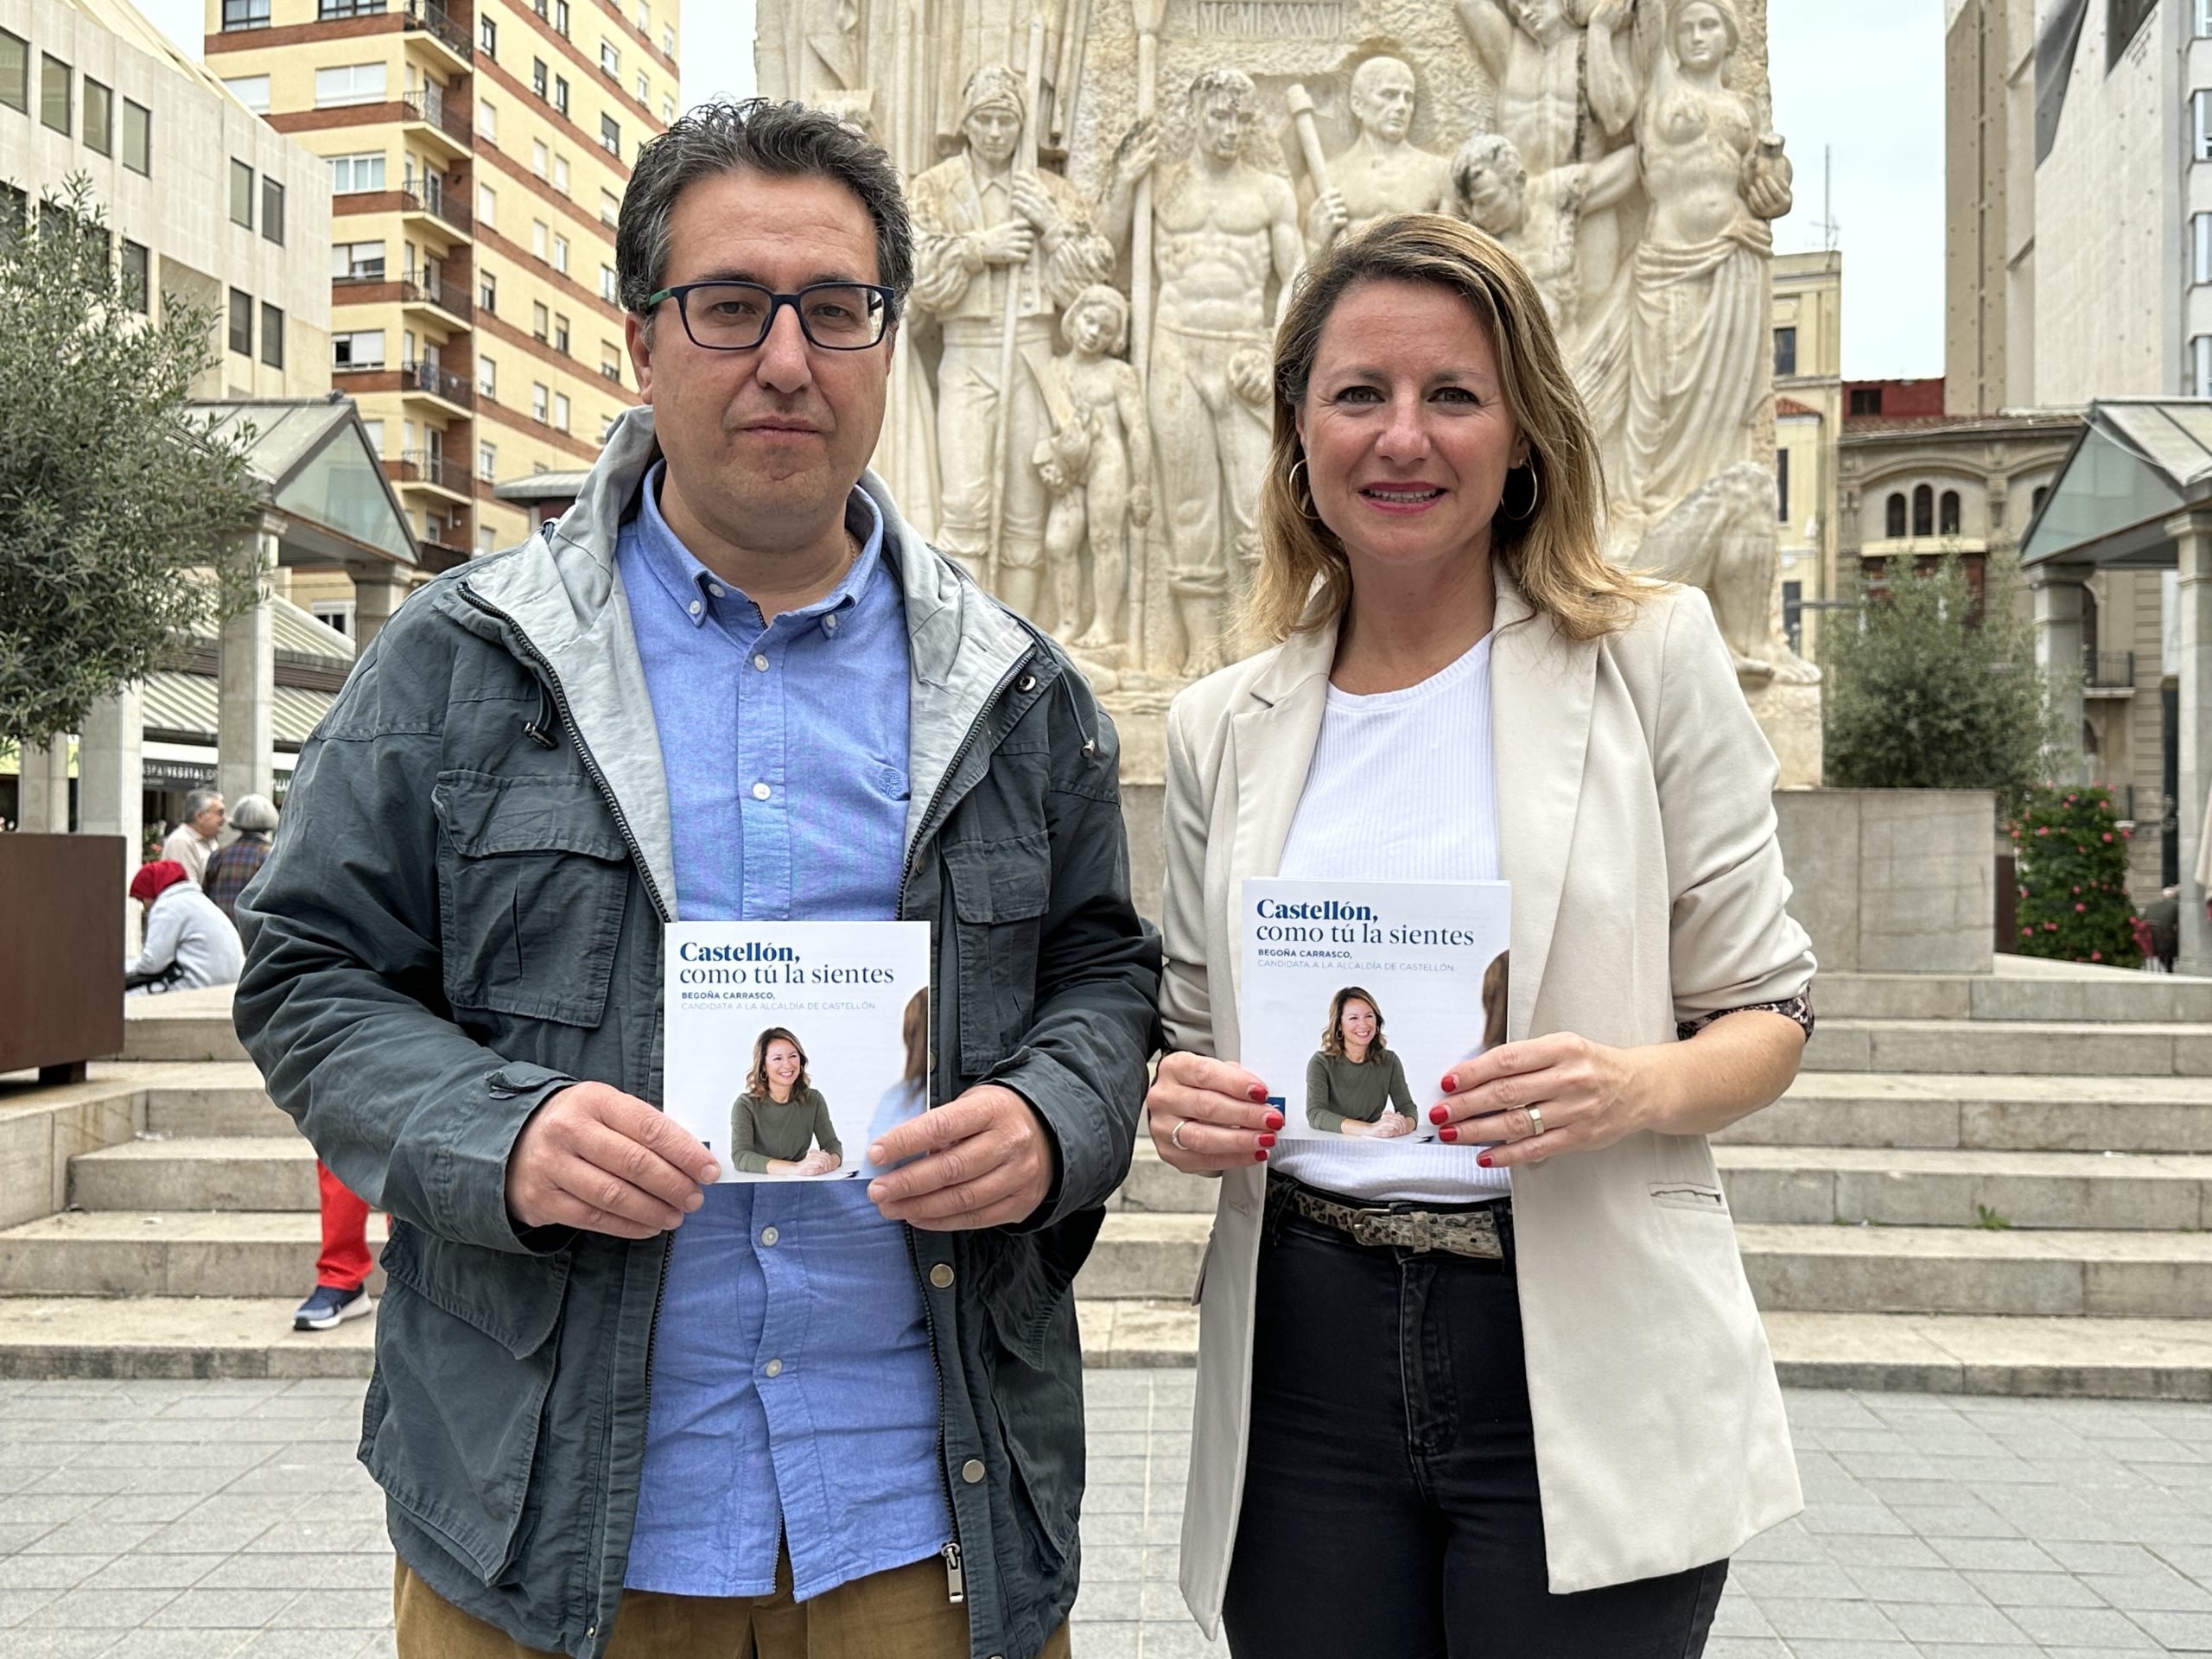 Paco Cabañero, concejal de Barrios y Participación Ciudadana, junta a Begoña Carrasco, alcaldesa de Castellón